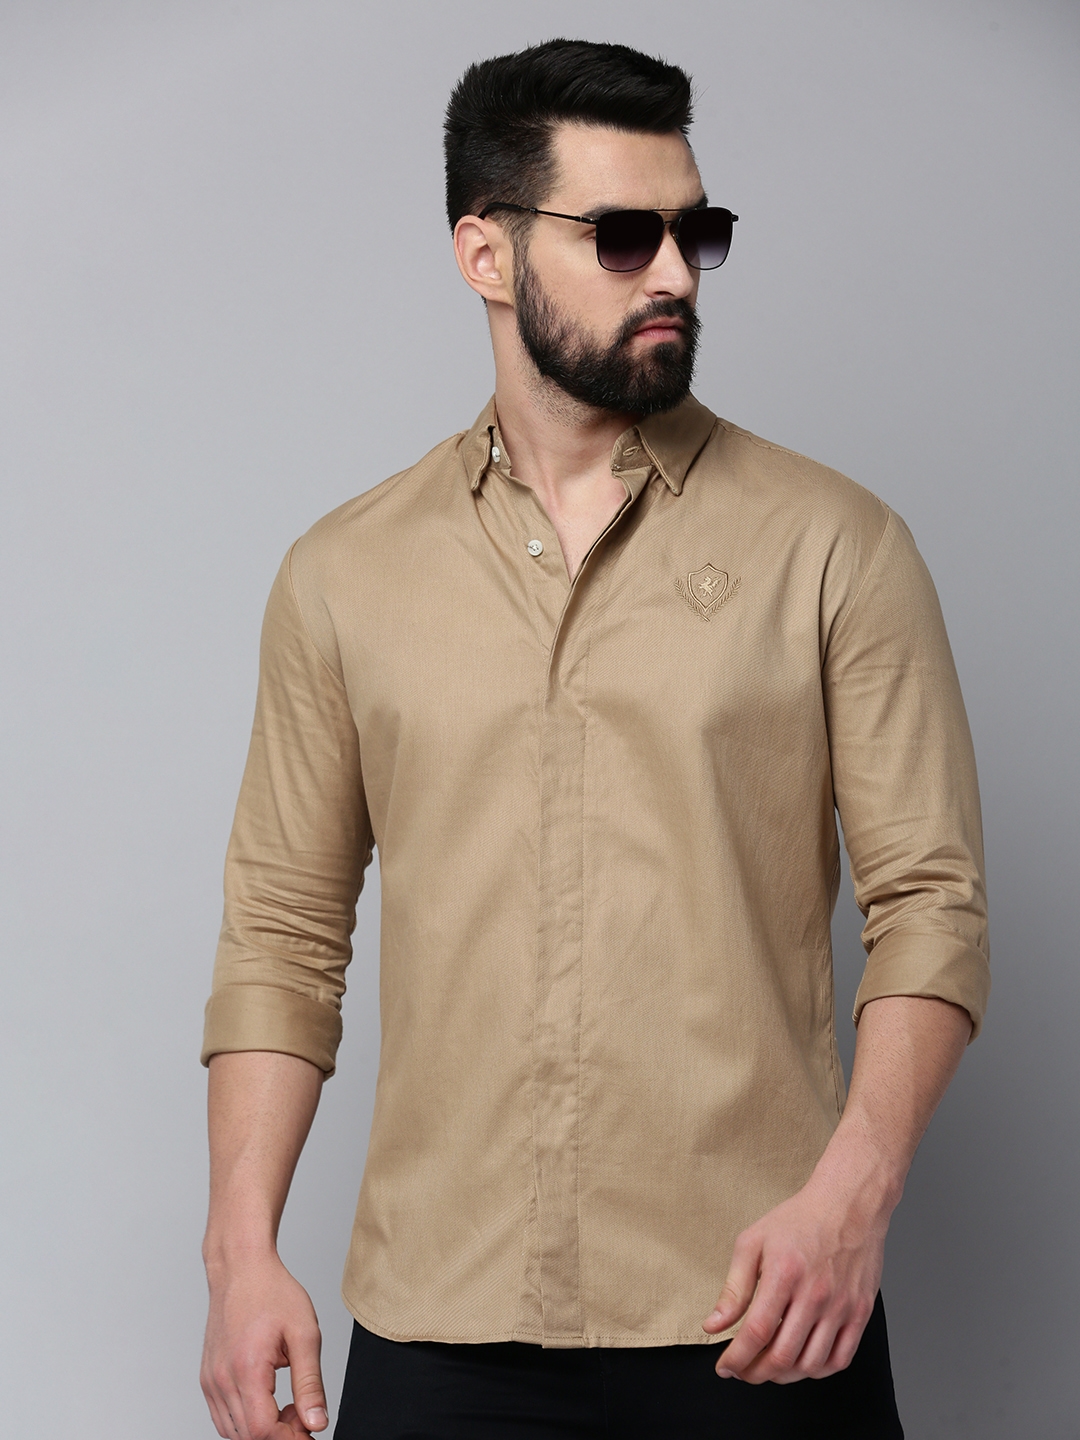 Showoff | SHOWOFF Men's Spread Collar Long Sleeves Solid Khaki Shirt 0